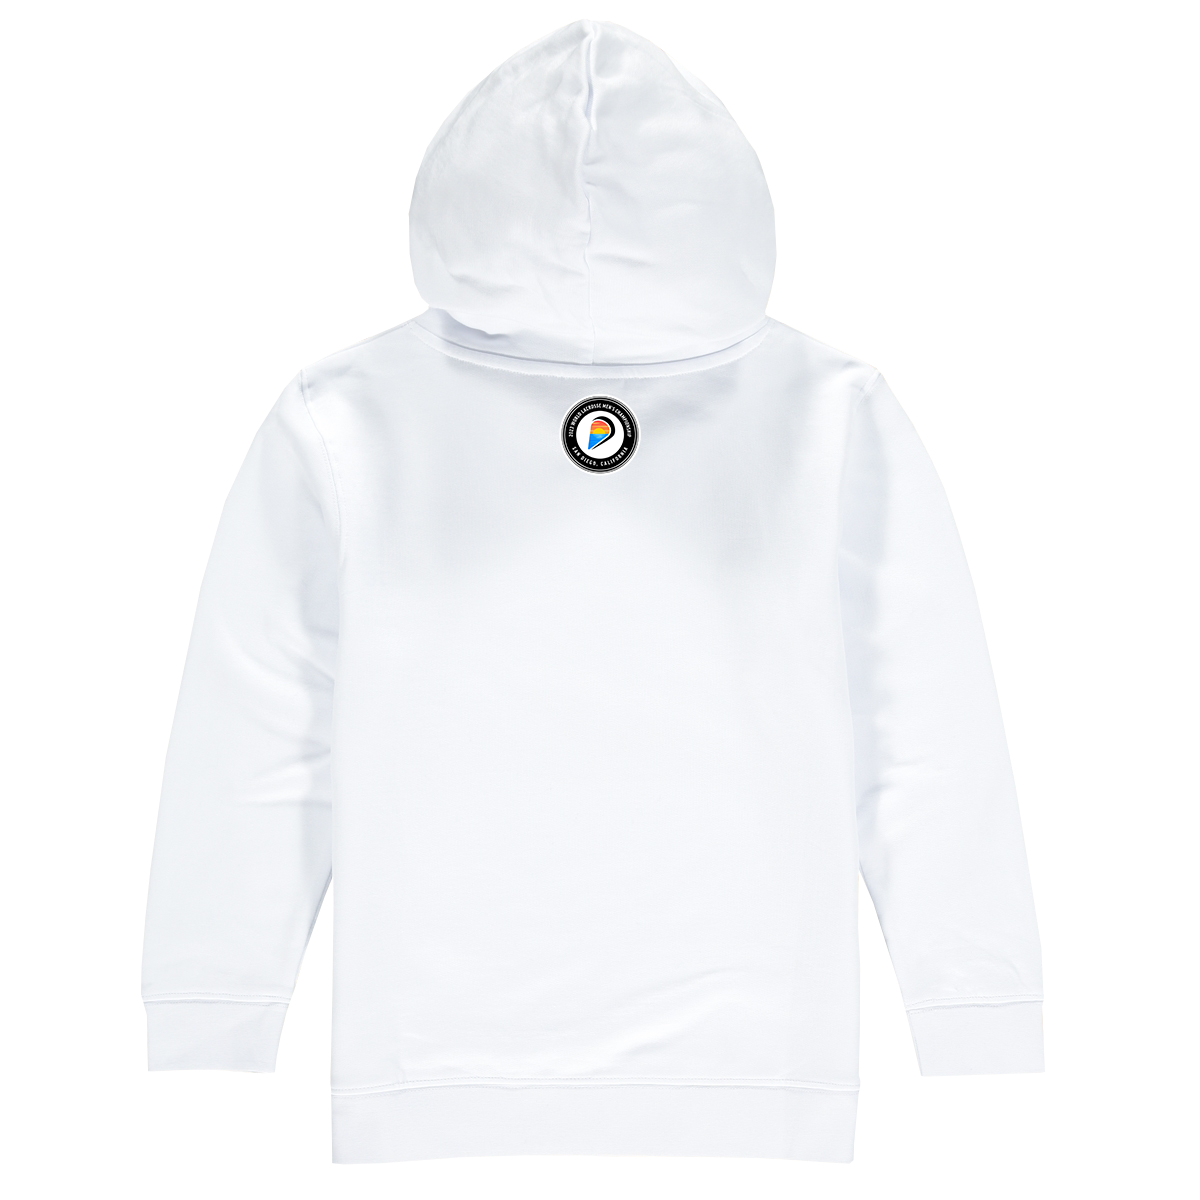 Israel Premium Unisex Hoodie Sweatshirt White